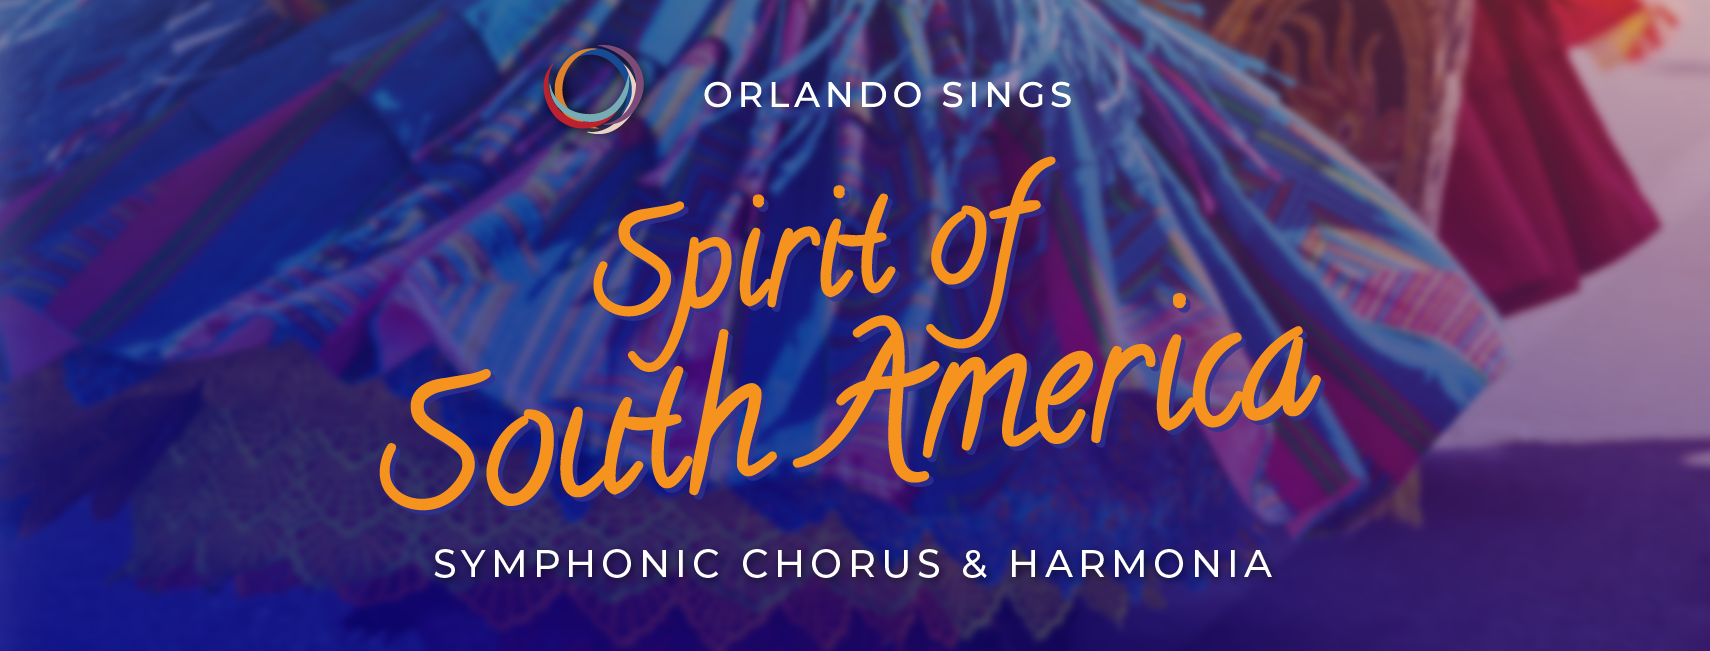 22-23 Season Concert 2 Spirit of South America - Orlando Sings